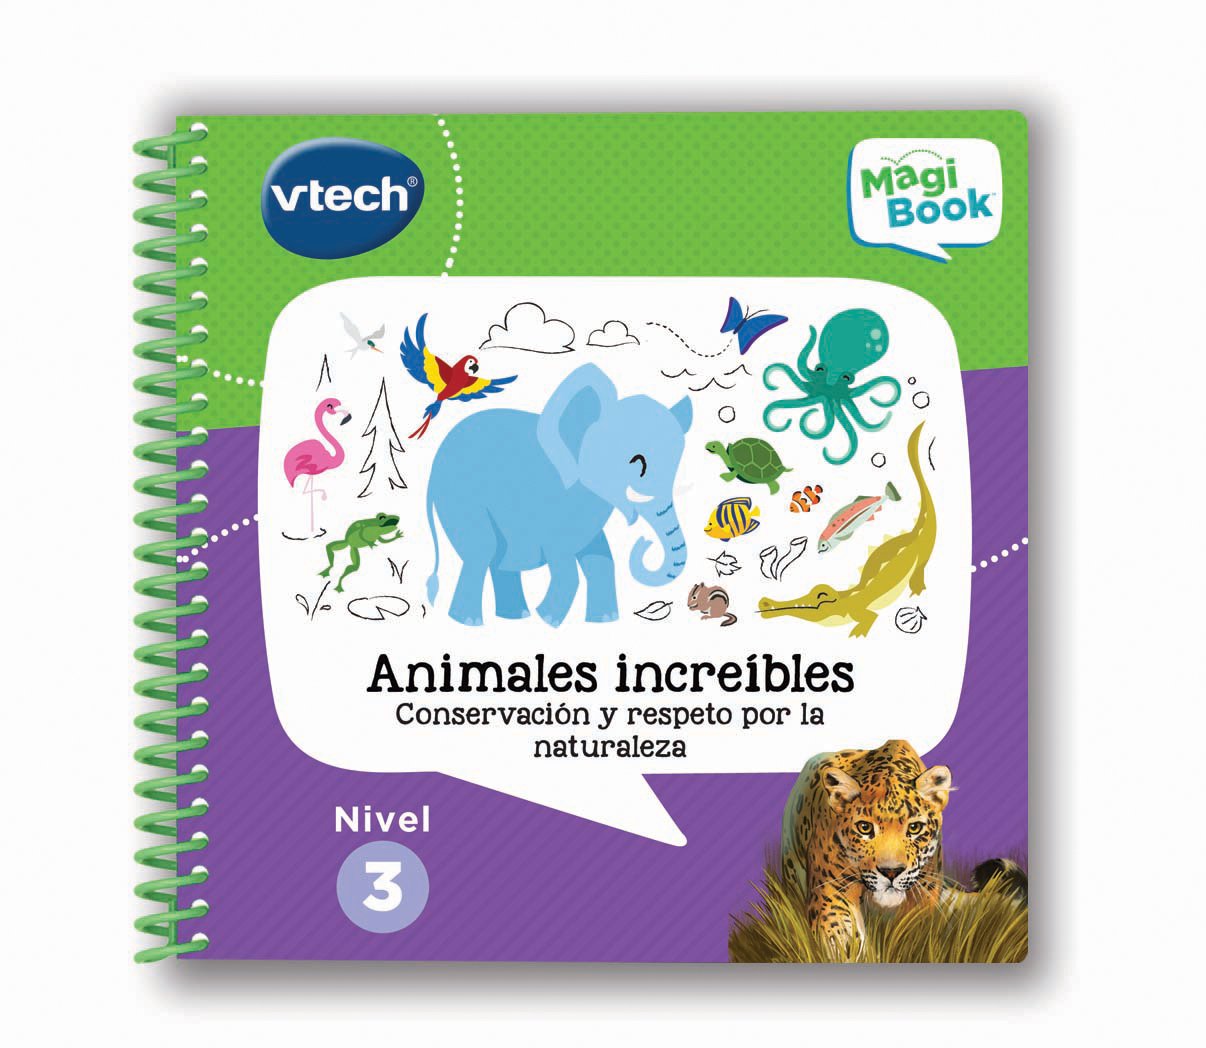  VTech MagiBook Platform Book Animals and Their